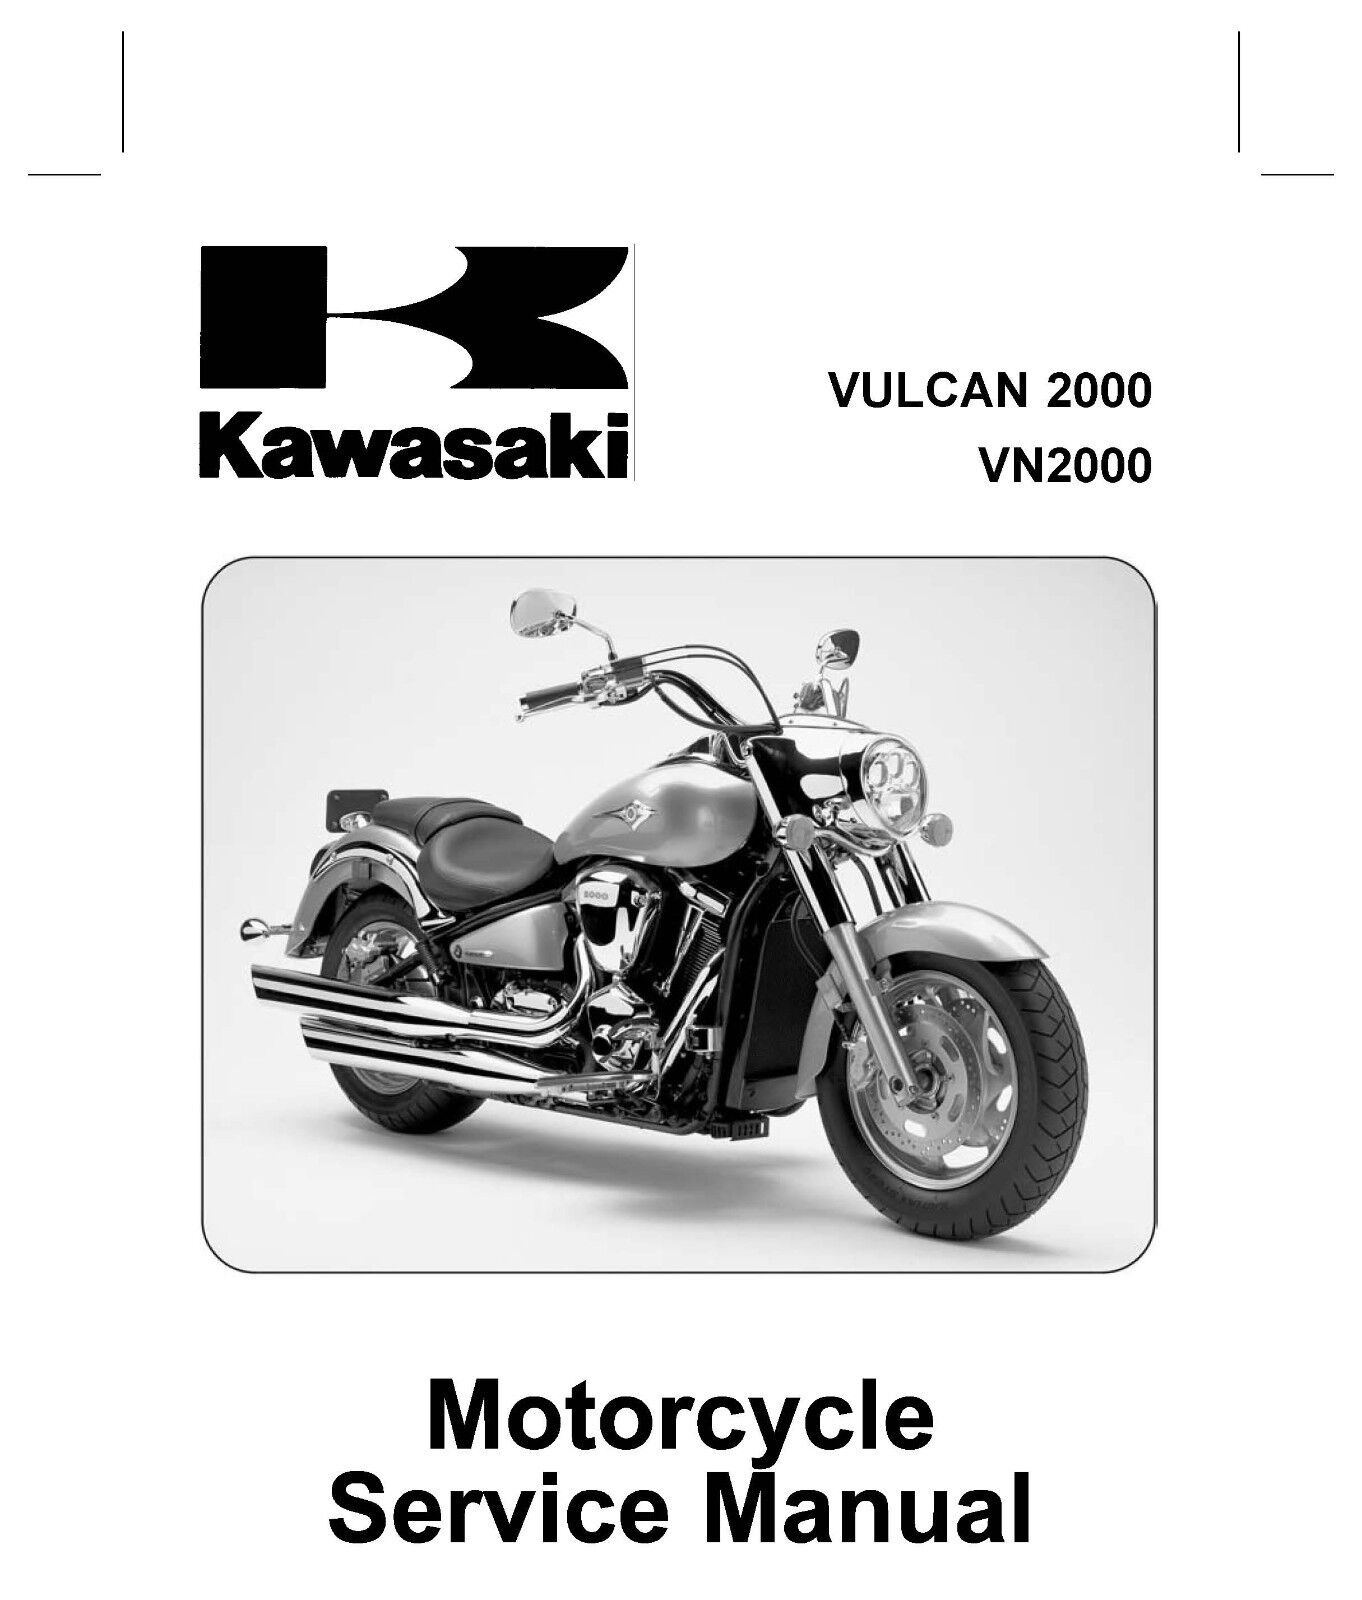 Обзор мотоцикла kawasaki vn 2000 vulcan